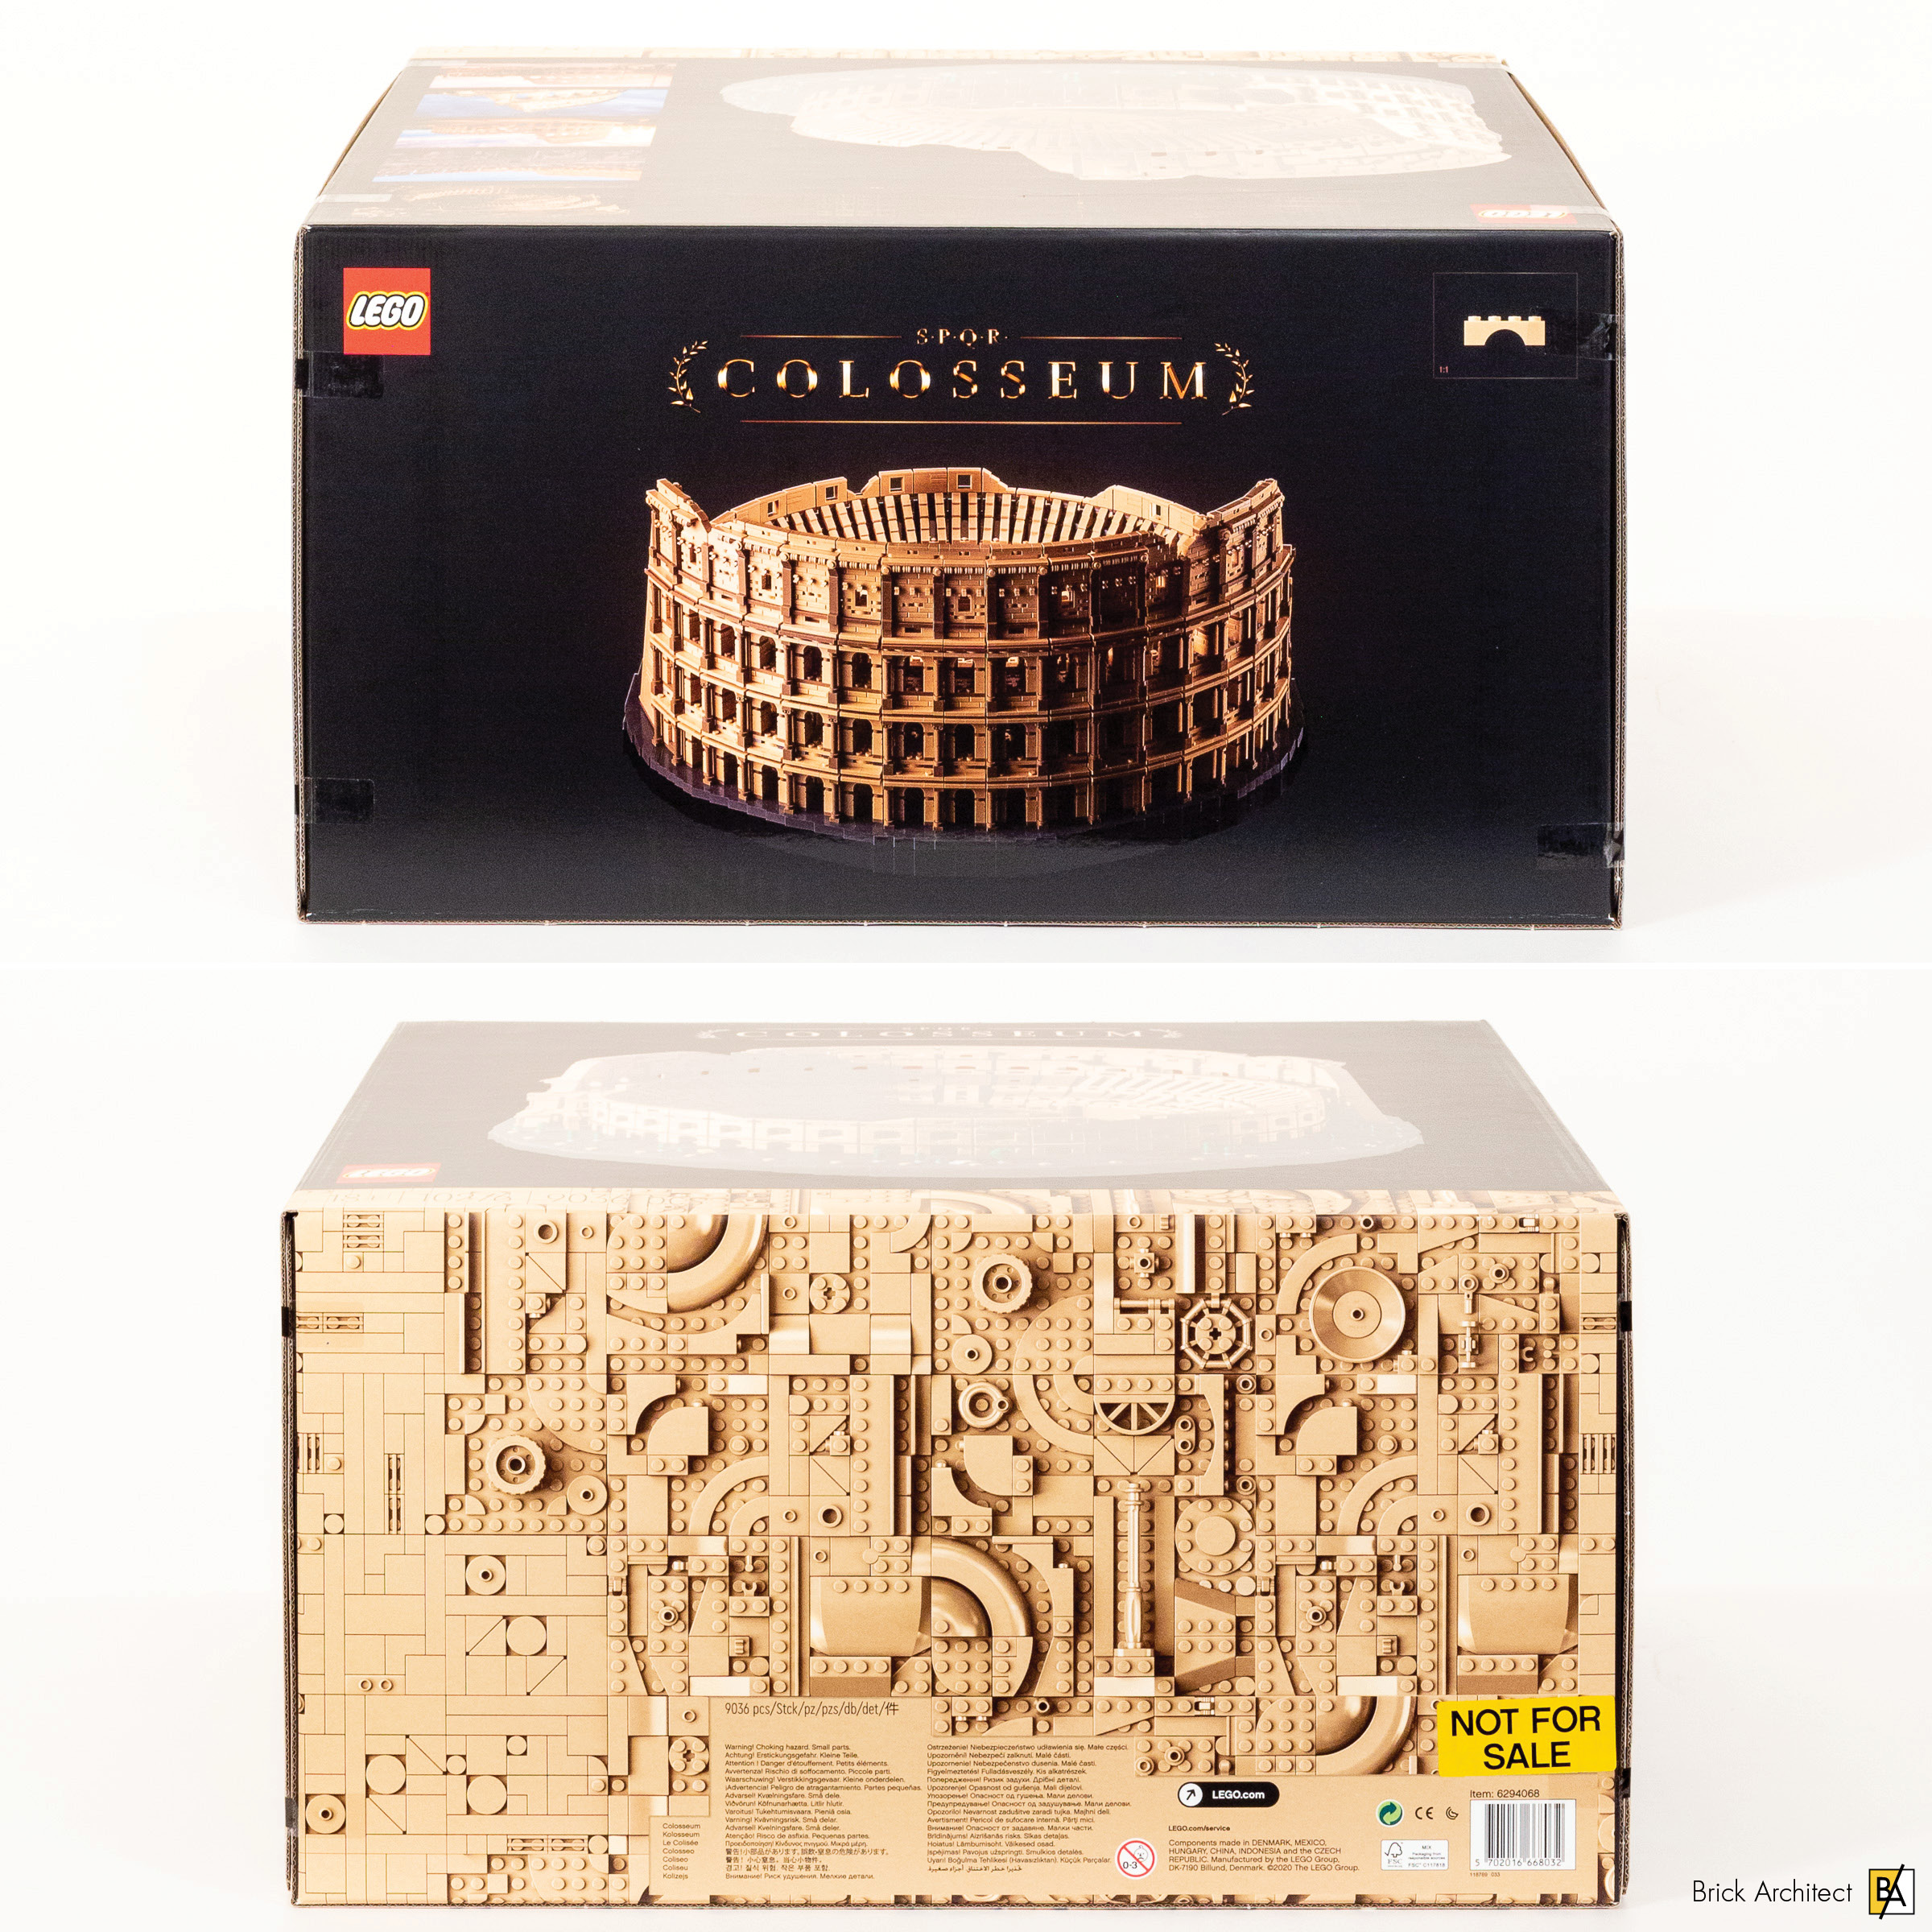 https://brickarchitect.com/wp-content/uploads/2020/11/Brick_Architect-review_LEGO_10276_Colosseum-Box_Side_2.jpg